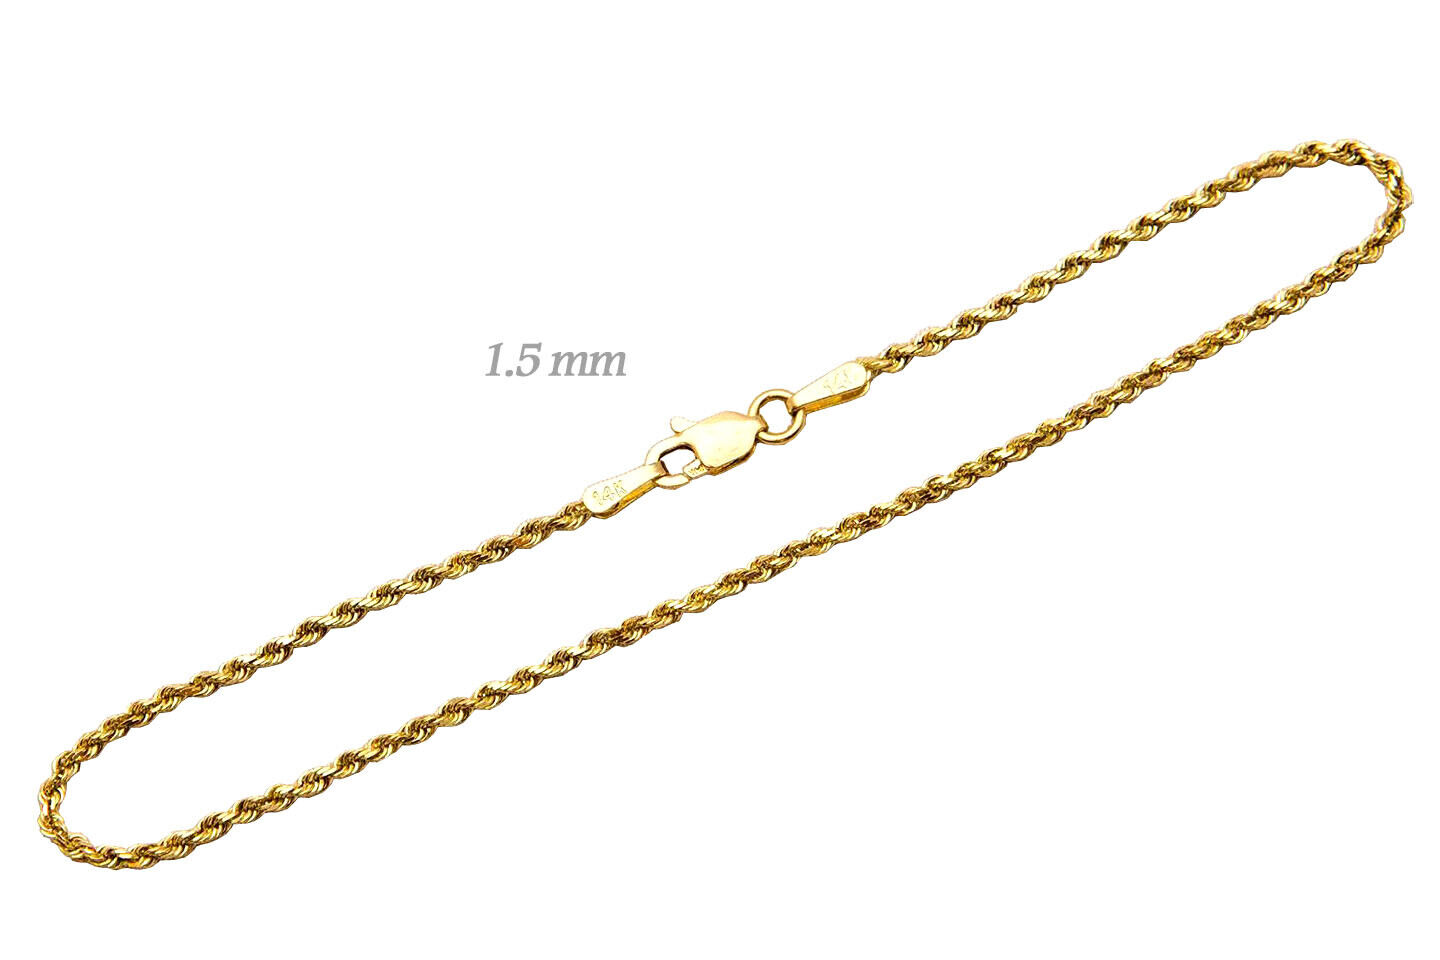 14k Solid Yellow Gold Rope Chain Necklace Bracelet 1mm-10mm Men Women Sz 7